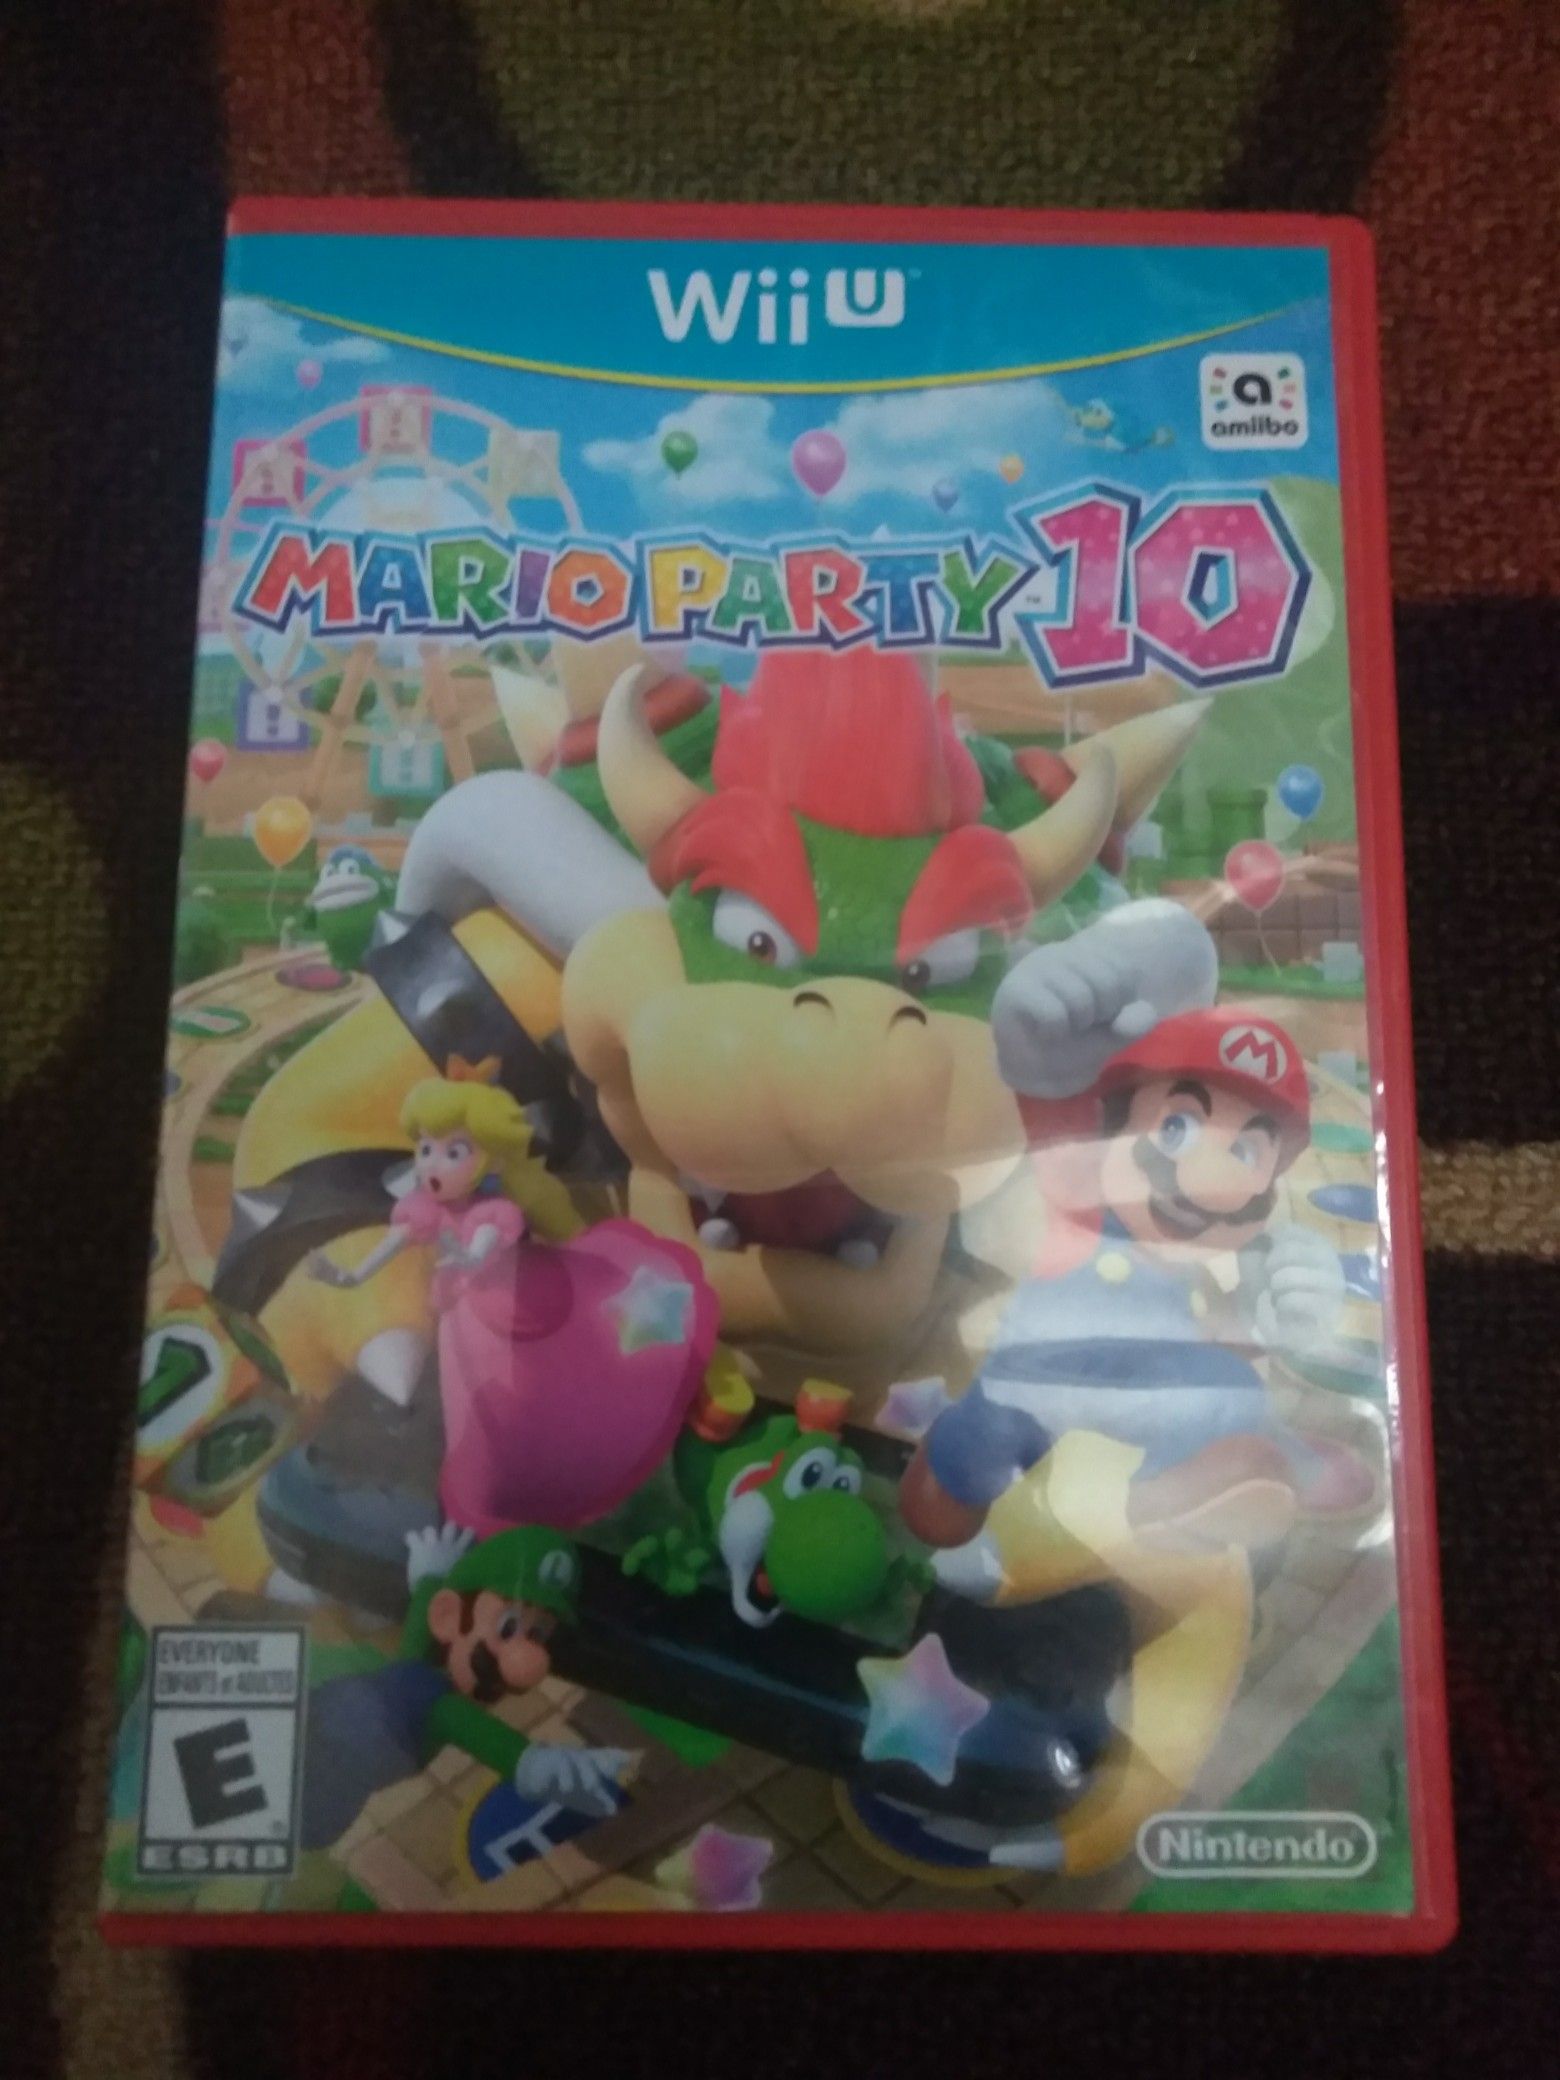 Mario party 10 for the Nintendo Wii U